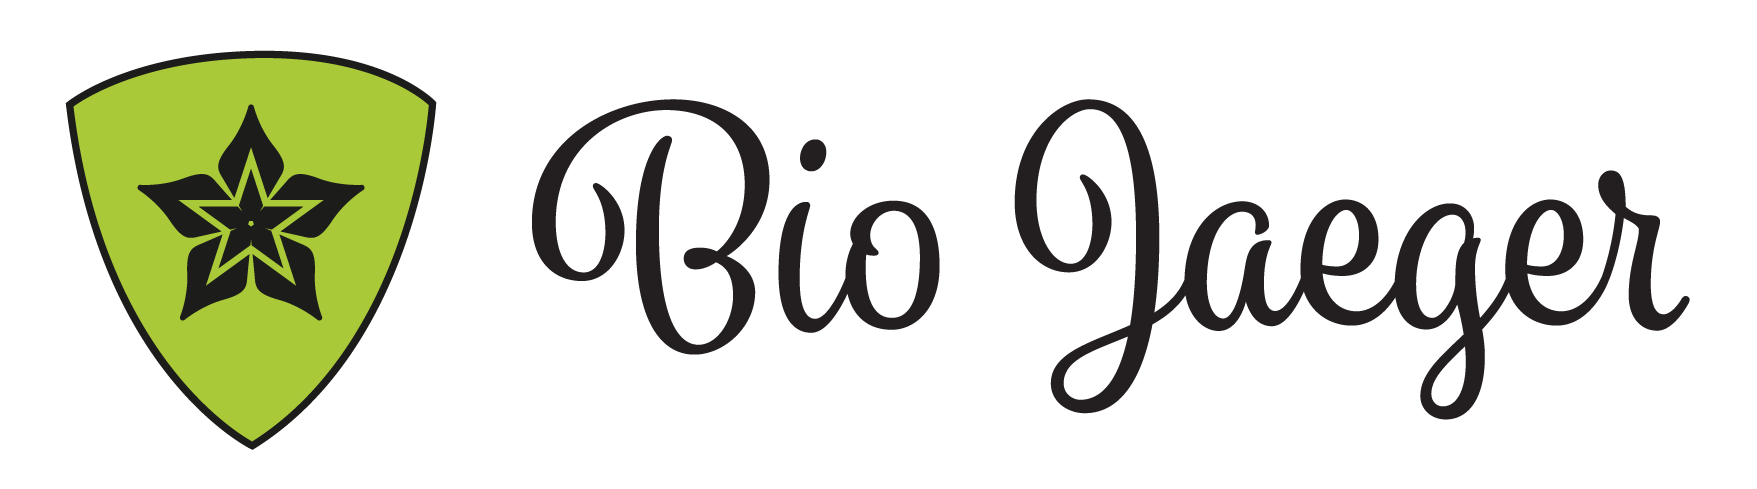 bio jaeger logo